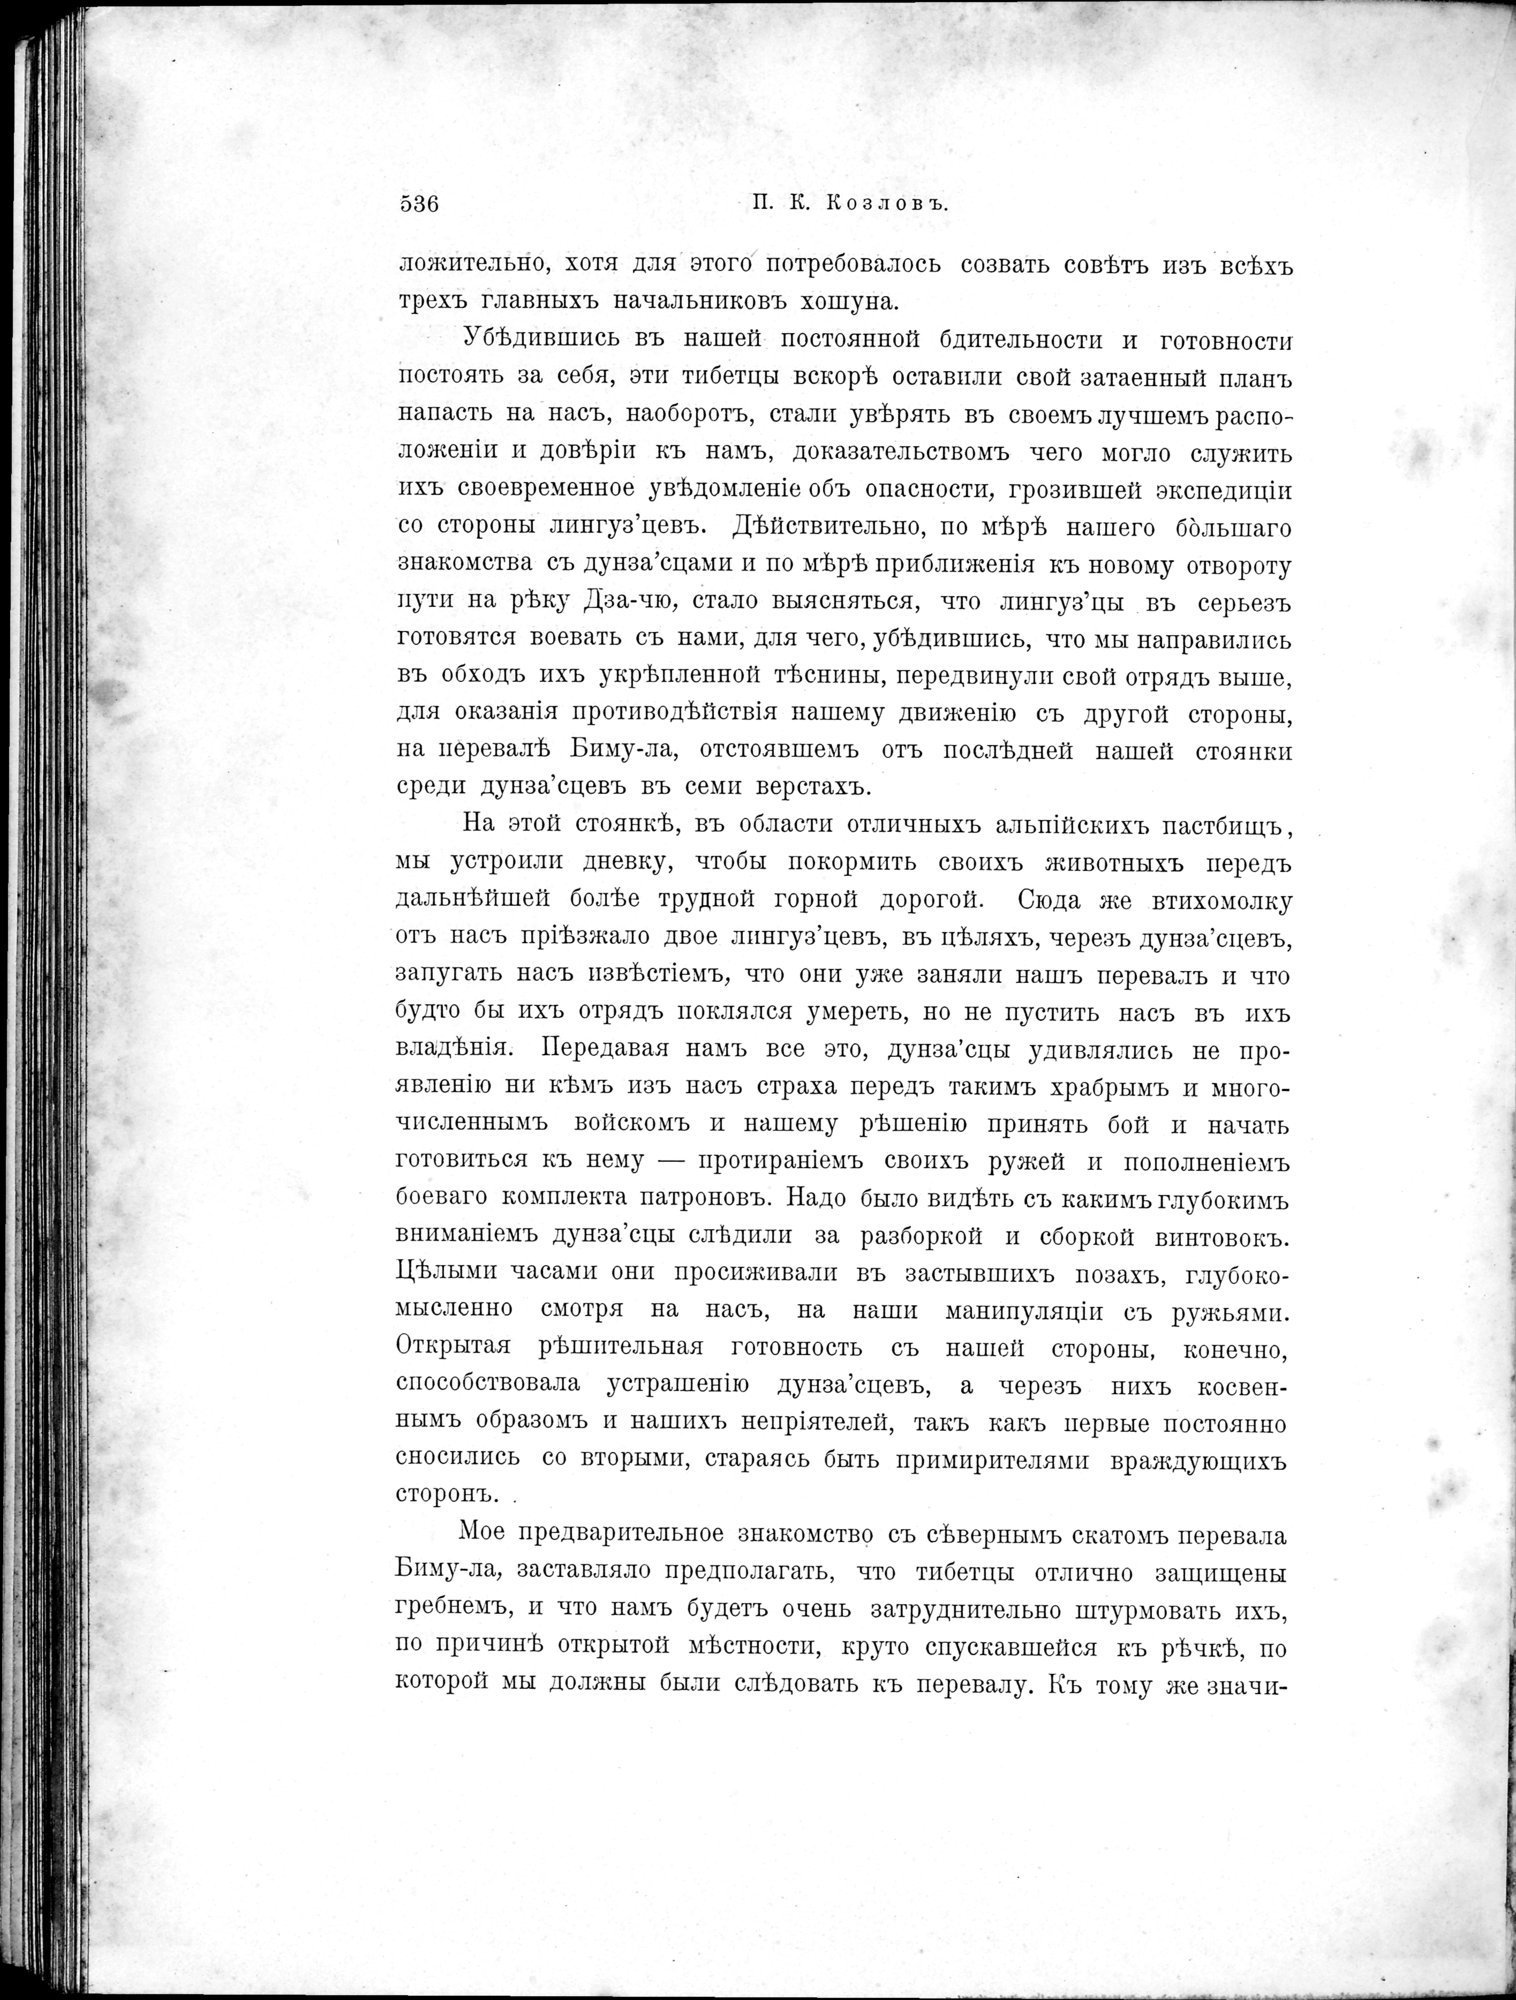 Mongoliia i Kam : vol.2 / Page 356 (Grayscale High Resolution Image)